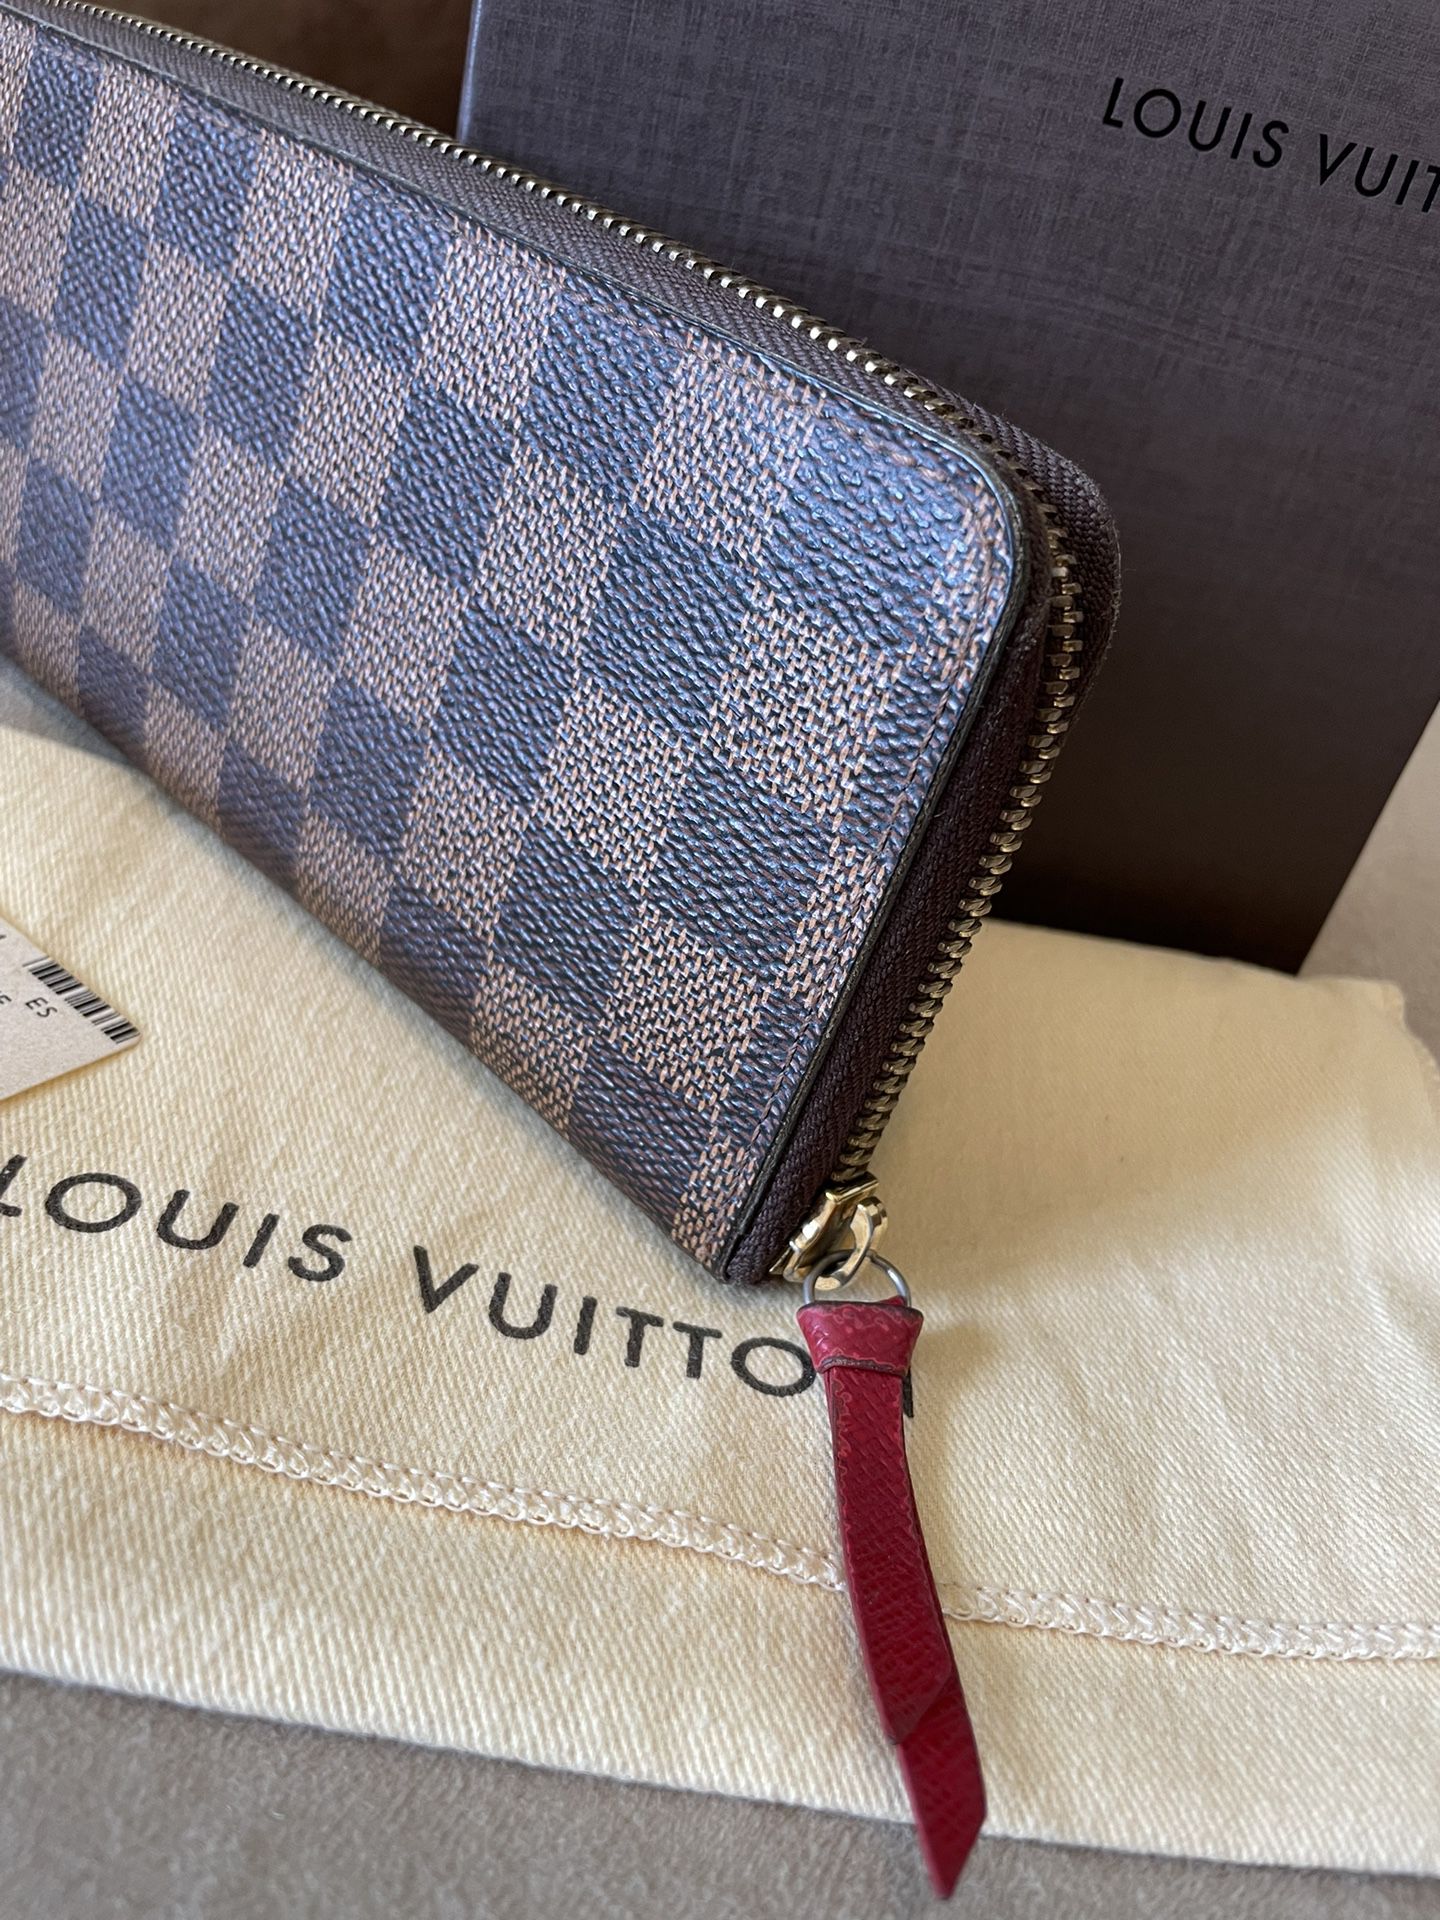 Louis Vuitton Wallets for sale in Medellín, Antioquia